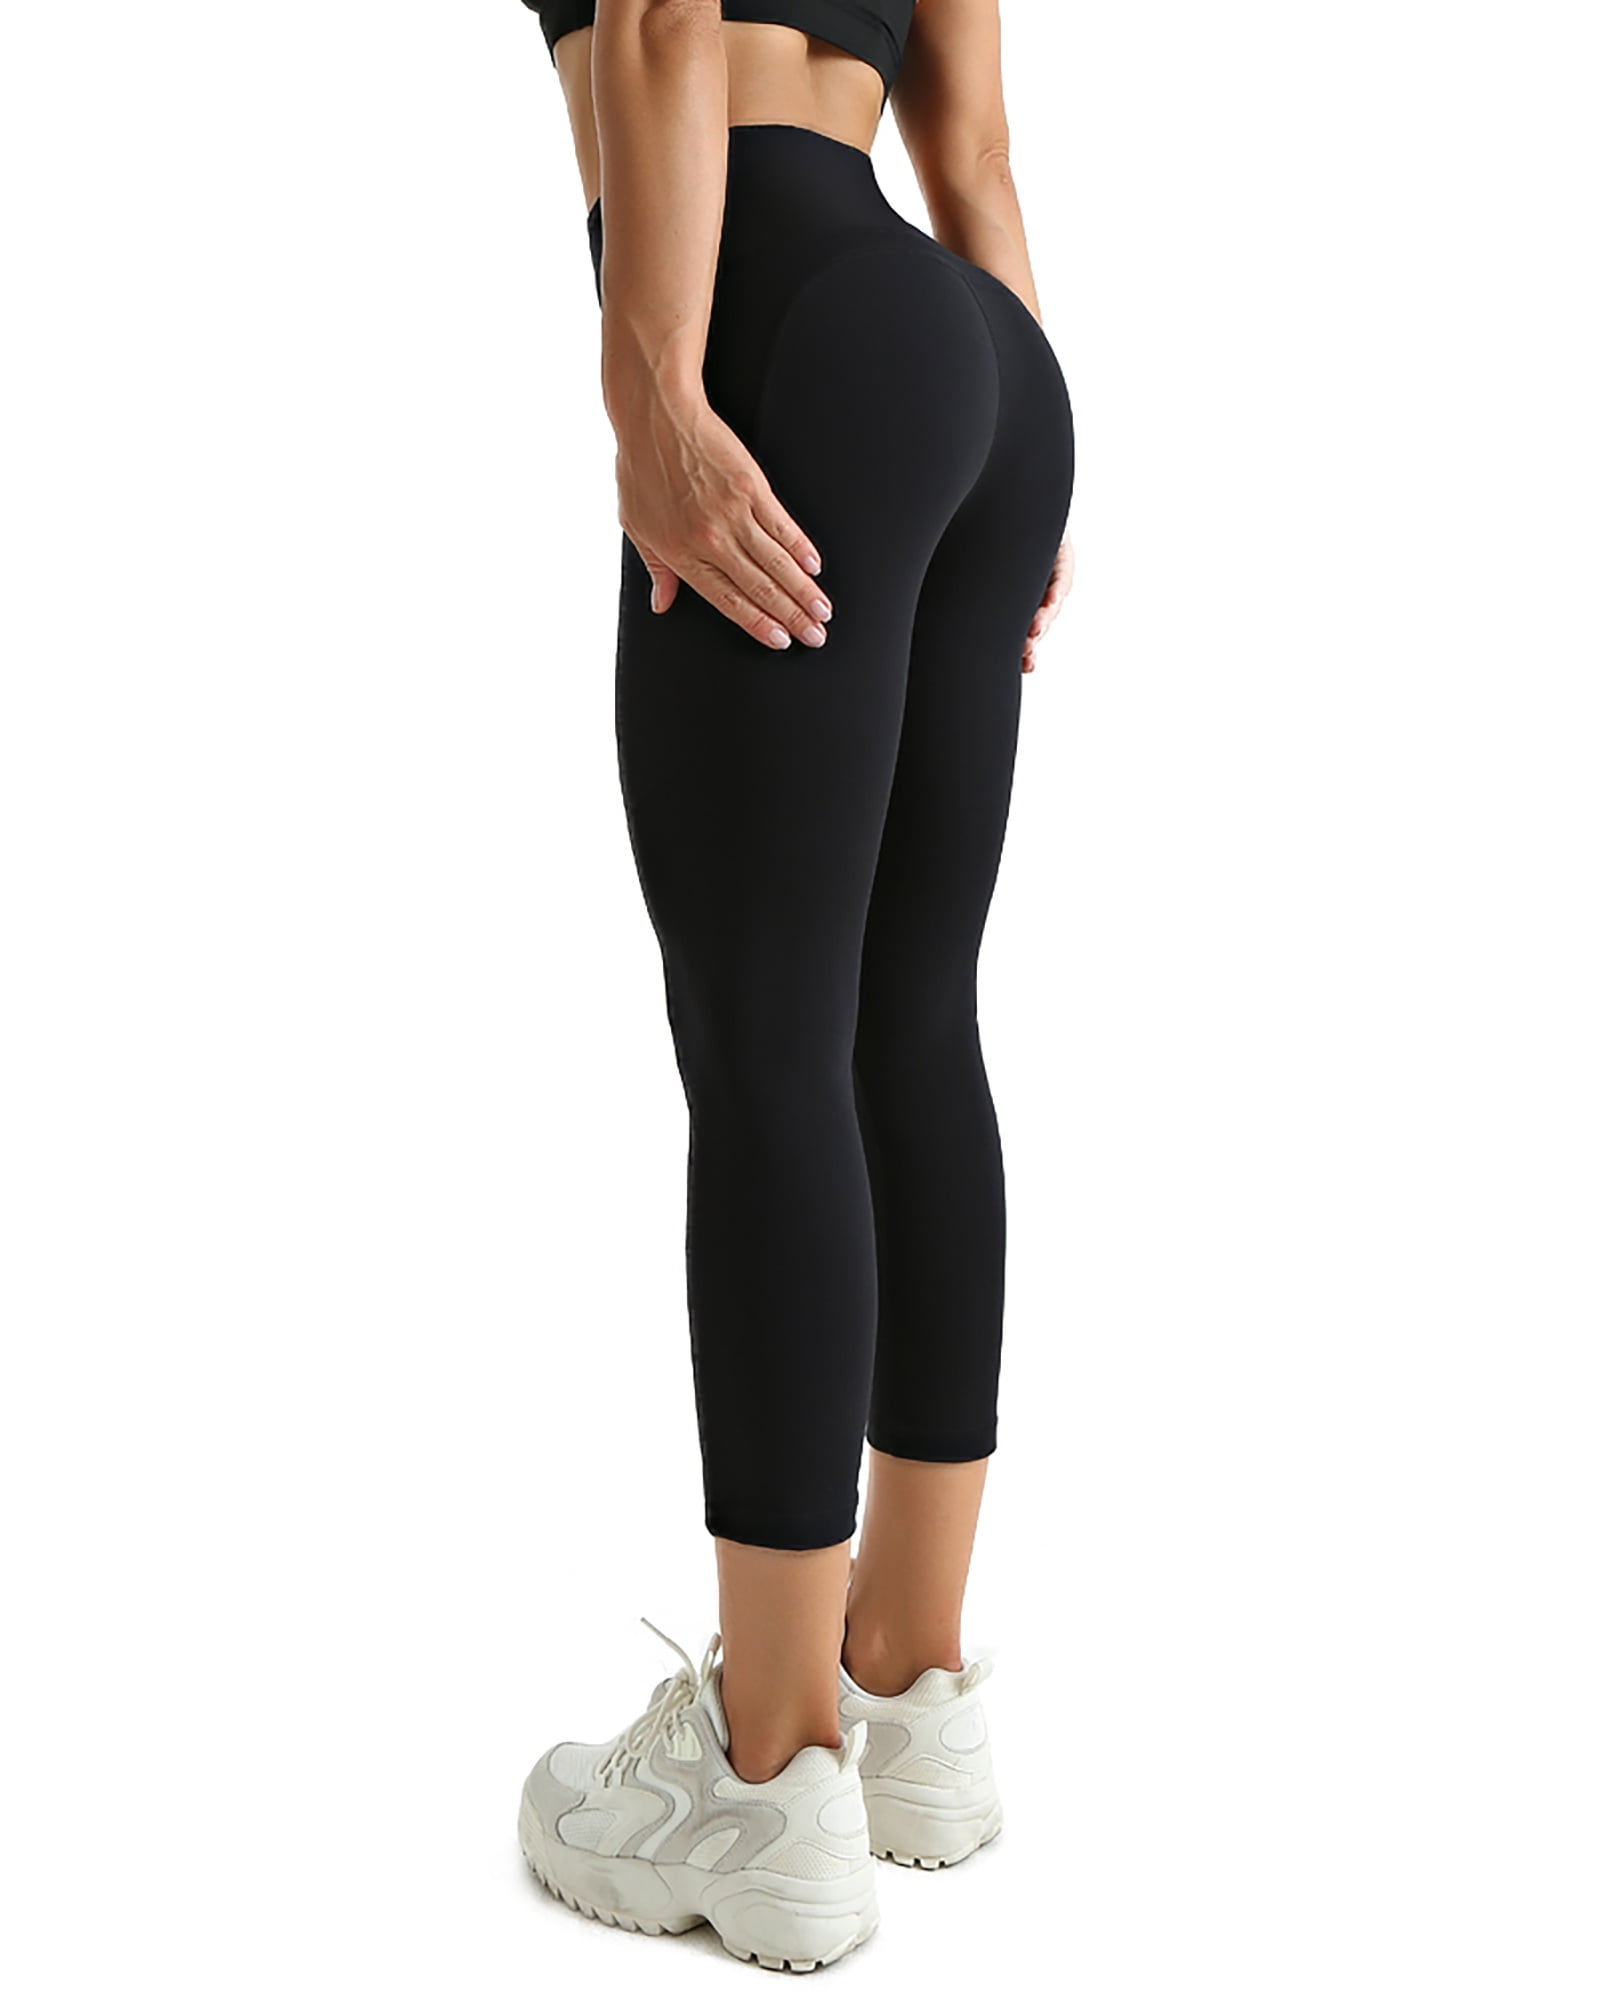 Women'sHi-Vis Sale Yoga Pants